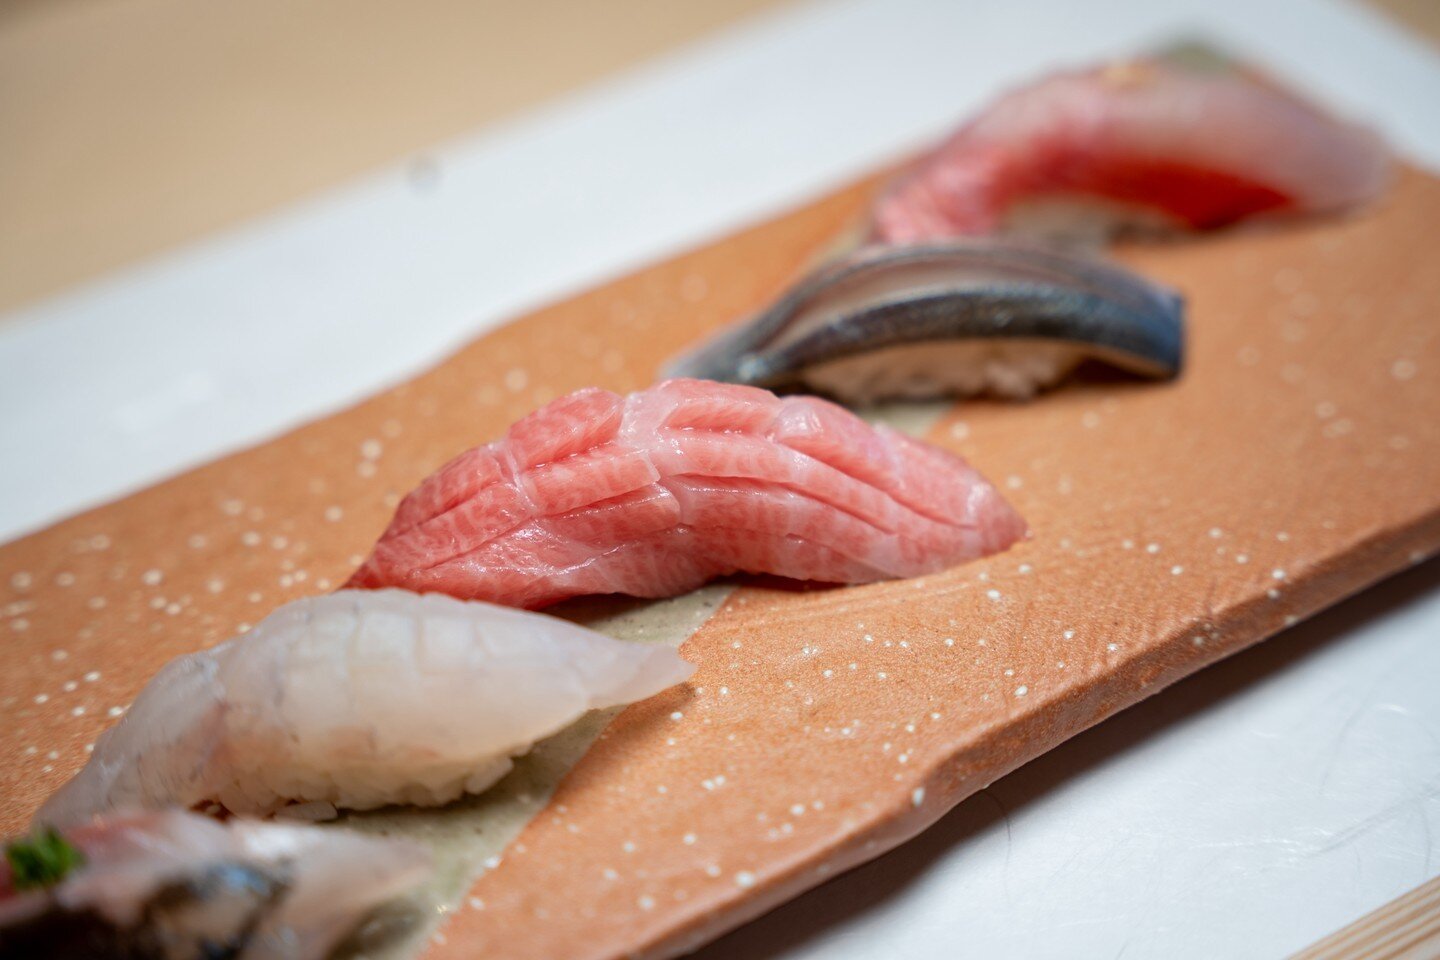 Let the joy of this sushi set the tone for your amazing day! Book your table now! #UmamiJourney 🍣🥢 

◾️◽️◾️◽️◾️◽️◾️◽️◾️◽️ 
🍣 𝐊𝐀𝐁𝐔𝐓𝐎 - 𝐄𝐃𝐎𝐌𝐀𝐄 𝐒𝐔𝐒𝐇𝐈 
⏰ ᴅᴀɪʟʏ: 5:30 ᴘᴍ - 9:00 ᴘᴍ 
📍 5040 ꜱᴘʀɪɴɢ ᴍᴏᴜɴᴛᴀɪɴ ʀᴅ. ʟᴀꜱ ᴠᴇɢᴀꜱ 
🔔 ʀᴇꜱᴇʀᴠᴀᴛɪᴏɴ 